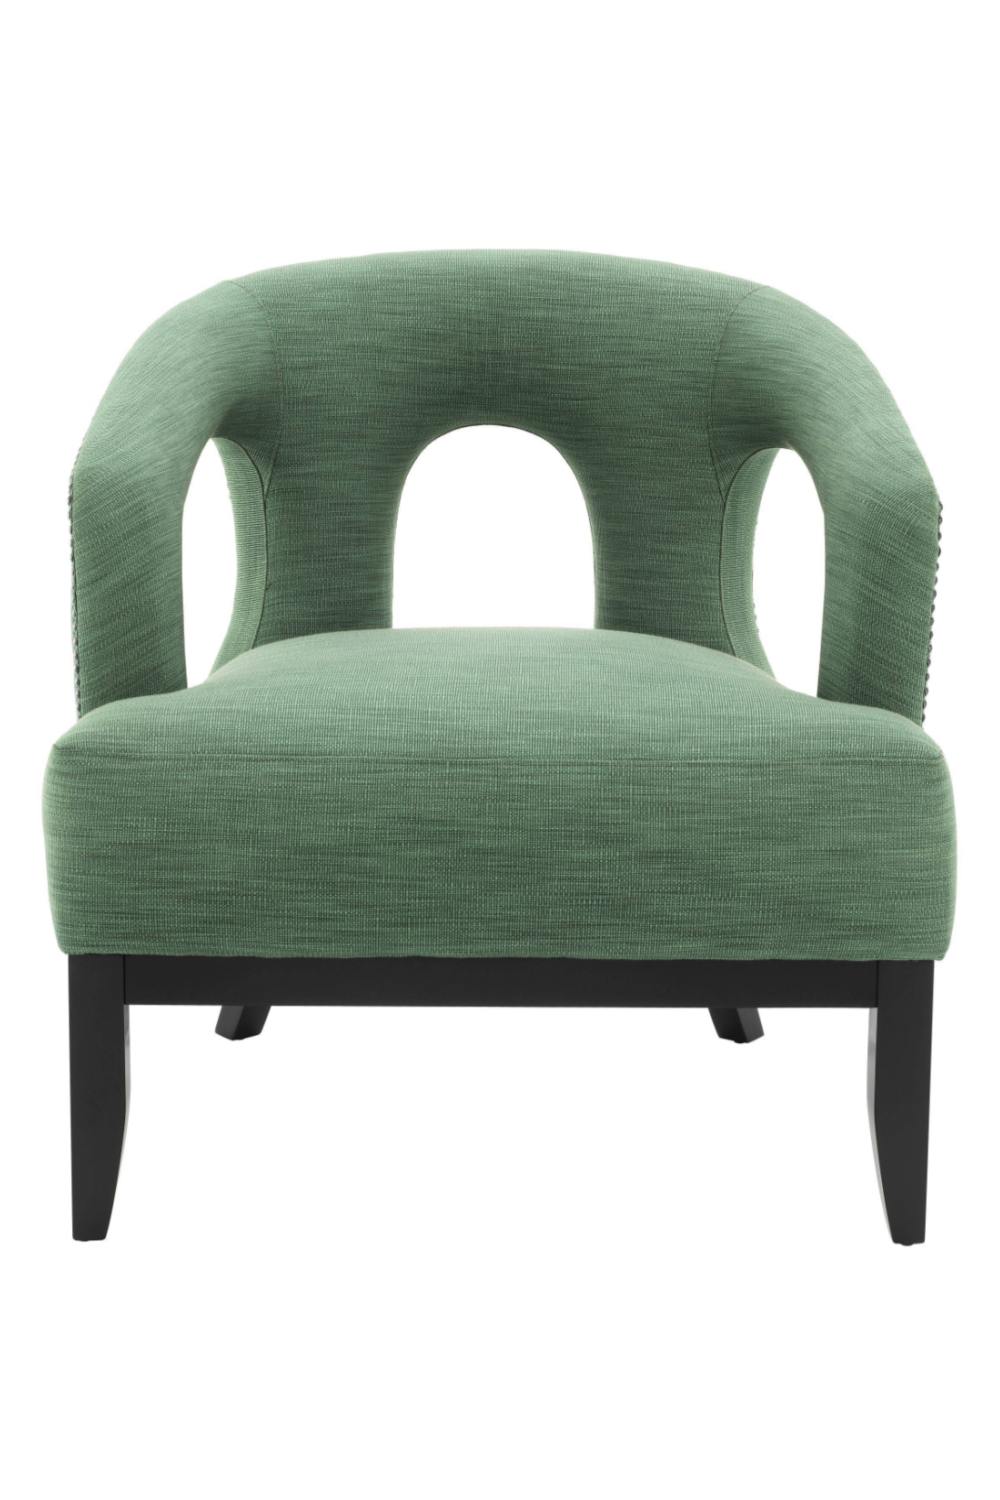 Studded Green Accent Chair | Eichholtz Adam| Oroa.com